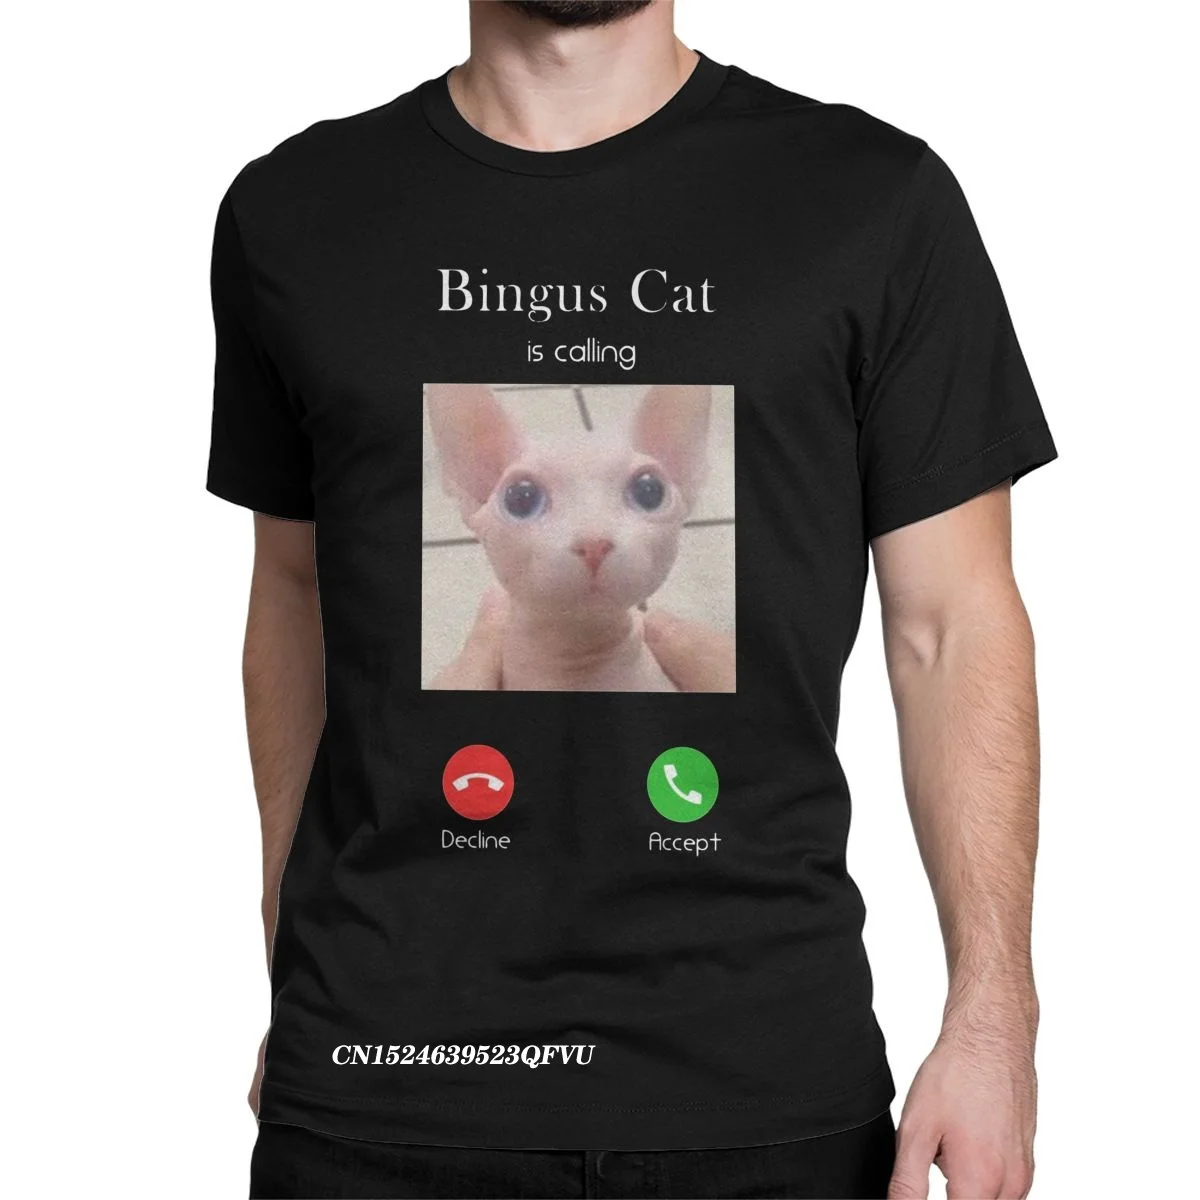 Bingus Cat Is Calling Memes Tee Shirt For Men Hairless Humorous Premium Cotton Tees Round Neck Harajuku Tshirt Plus Size Tops